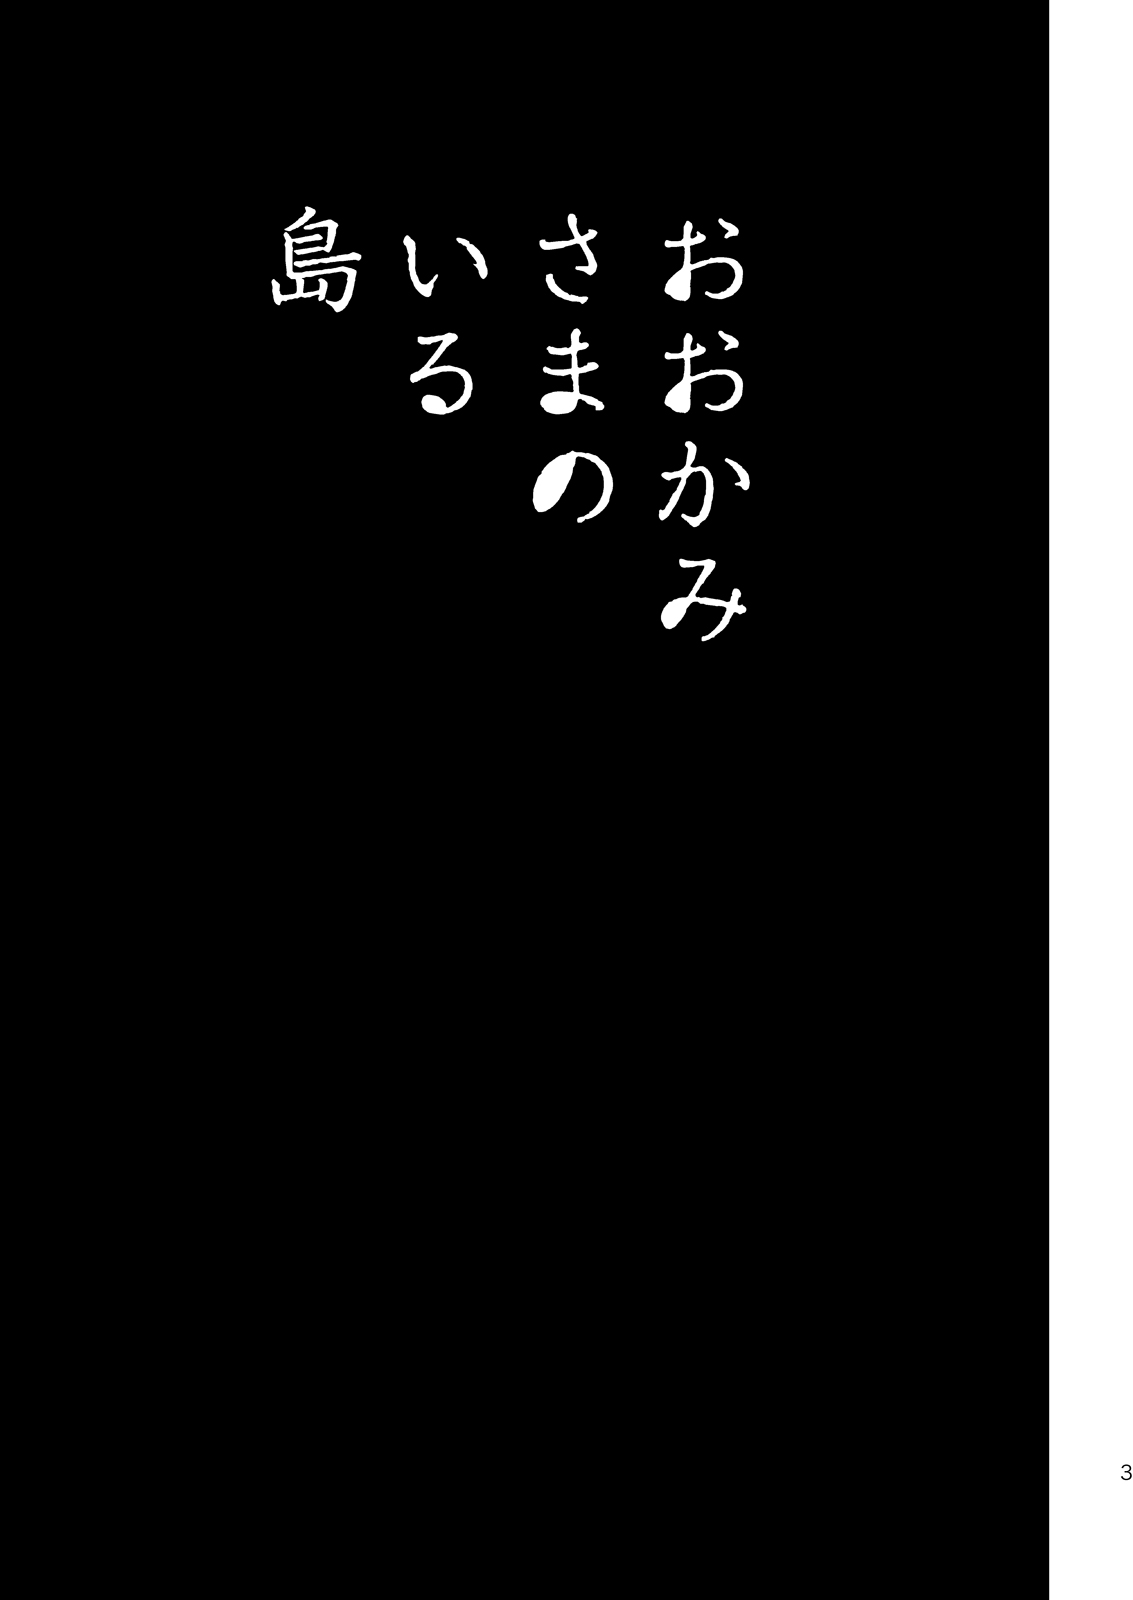 (Yarou Fes 2013 petit) [Draw Two (Draw2)] Ookami-sama no Iru Shima (野郎フェス2013 petit) [Draw Two (土狼弐)] おおかみさまのいる島